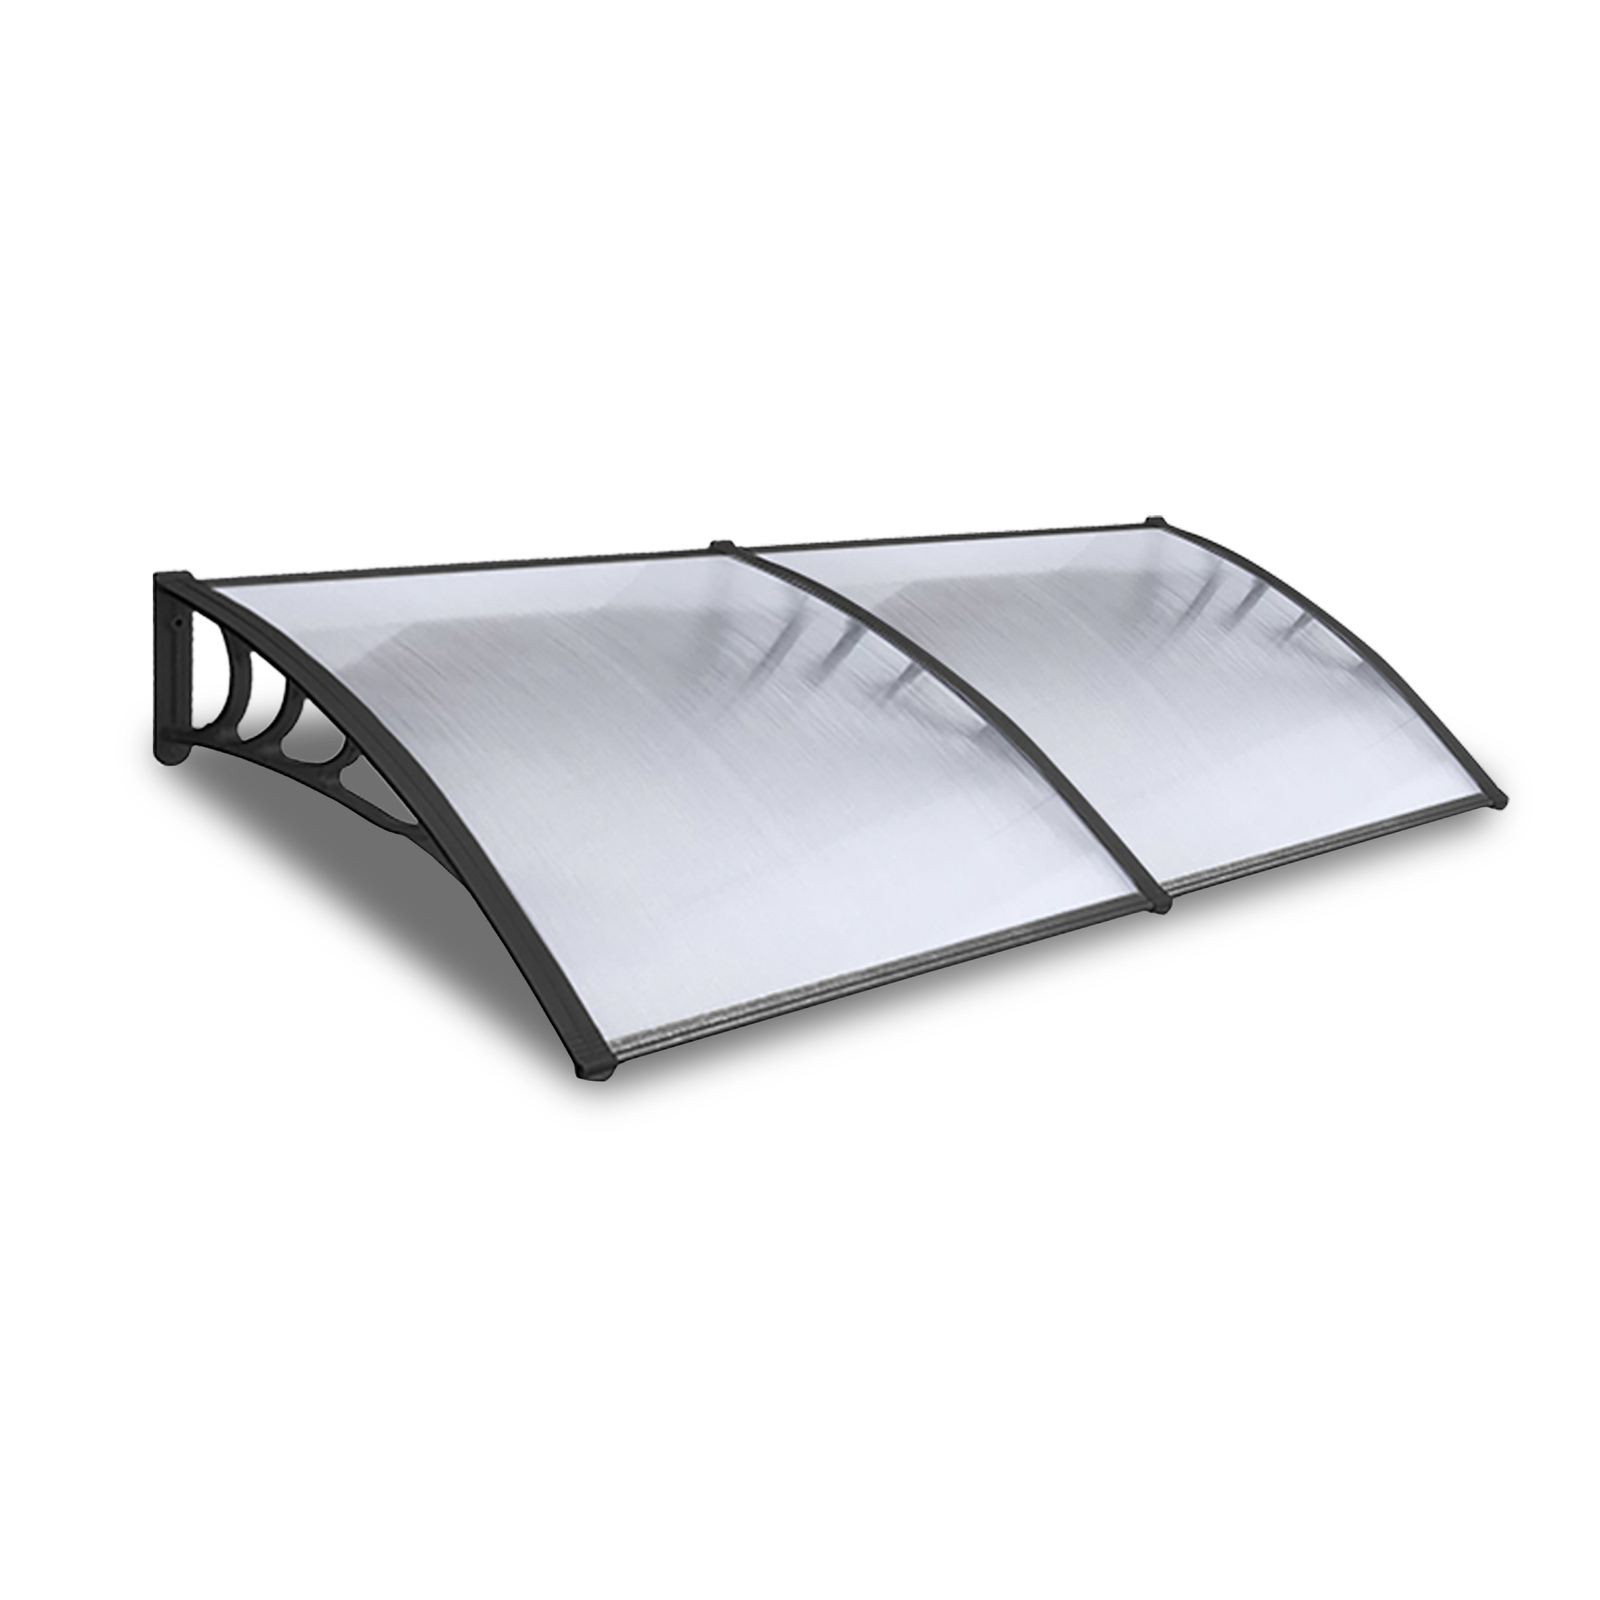 2.4 x 1M Window Door Awning Canopy Outdoor Patio UV Sun Shield Shade Waterproof Rain Cover - Clear Panel